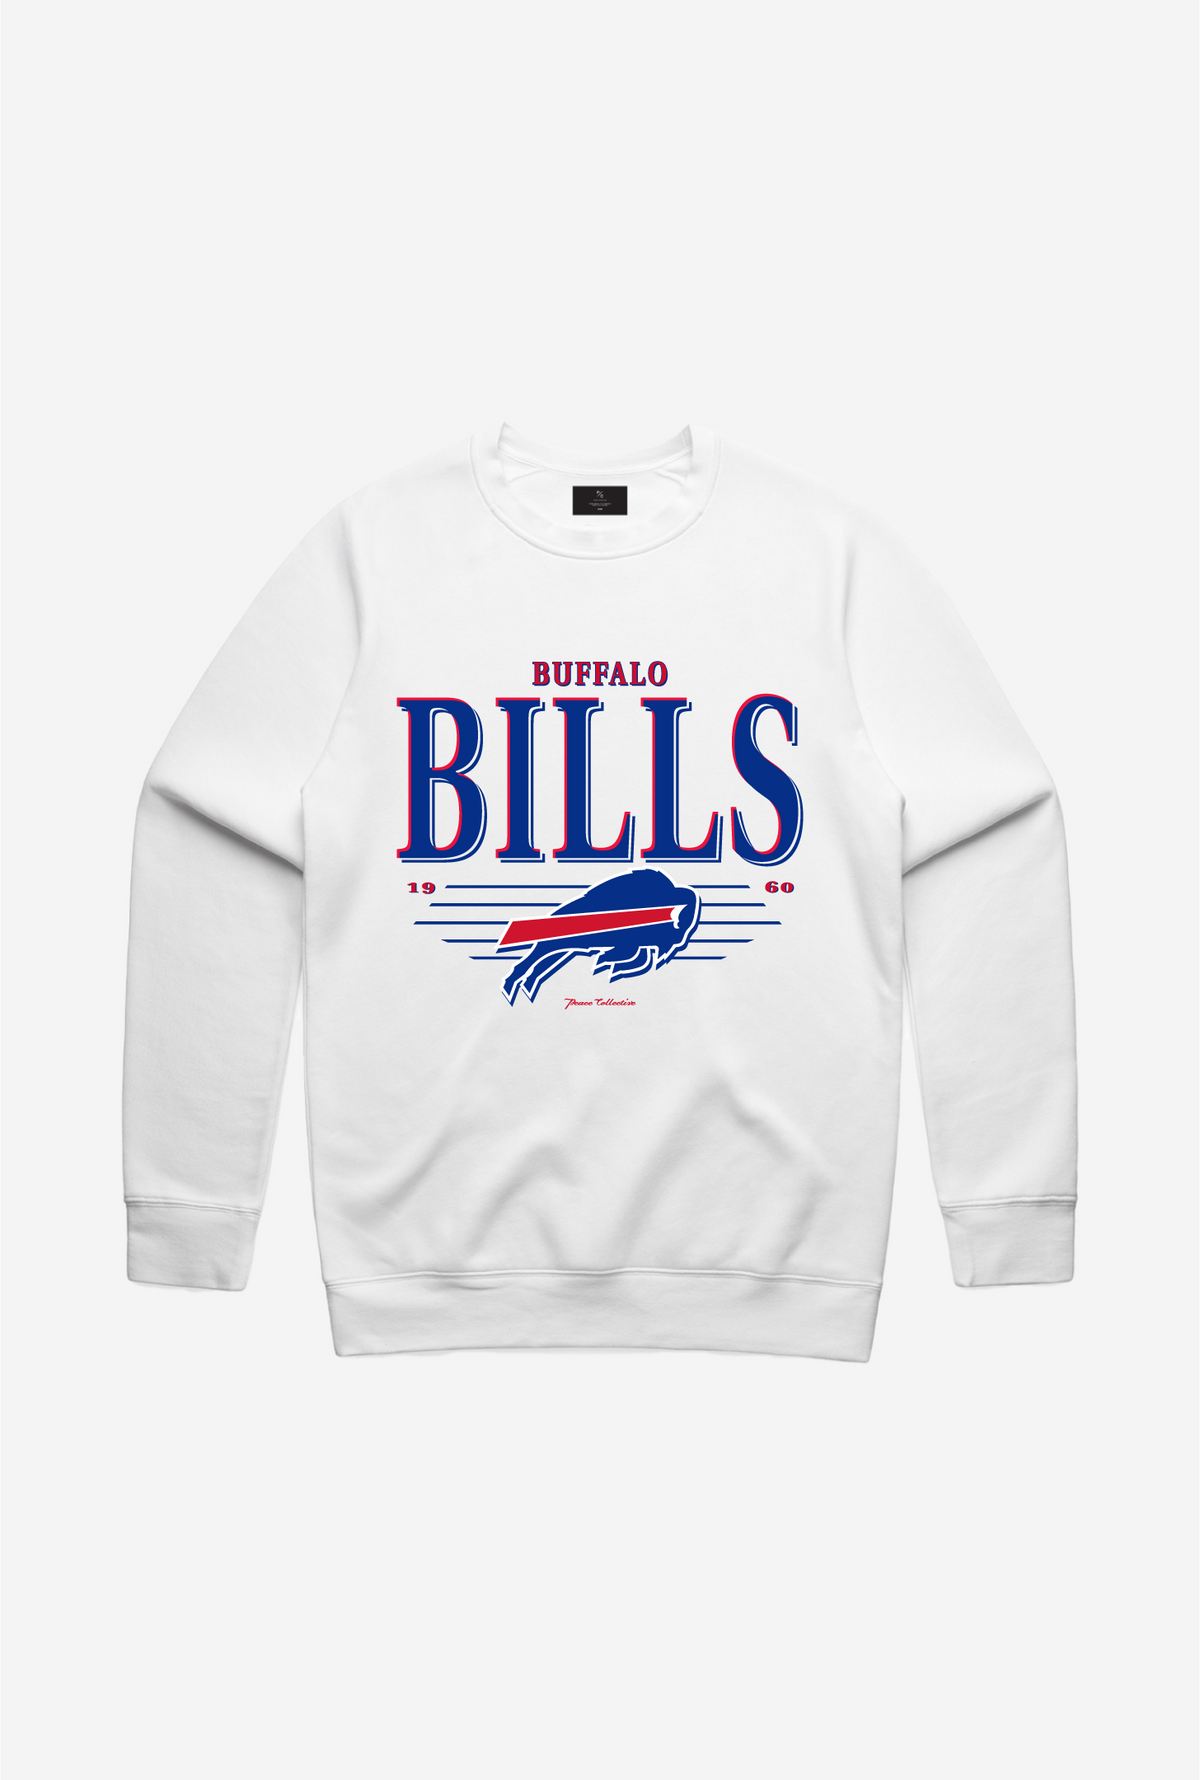 Buffalo Bills Throwback Crewneck - White